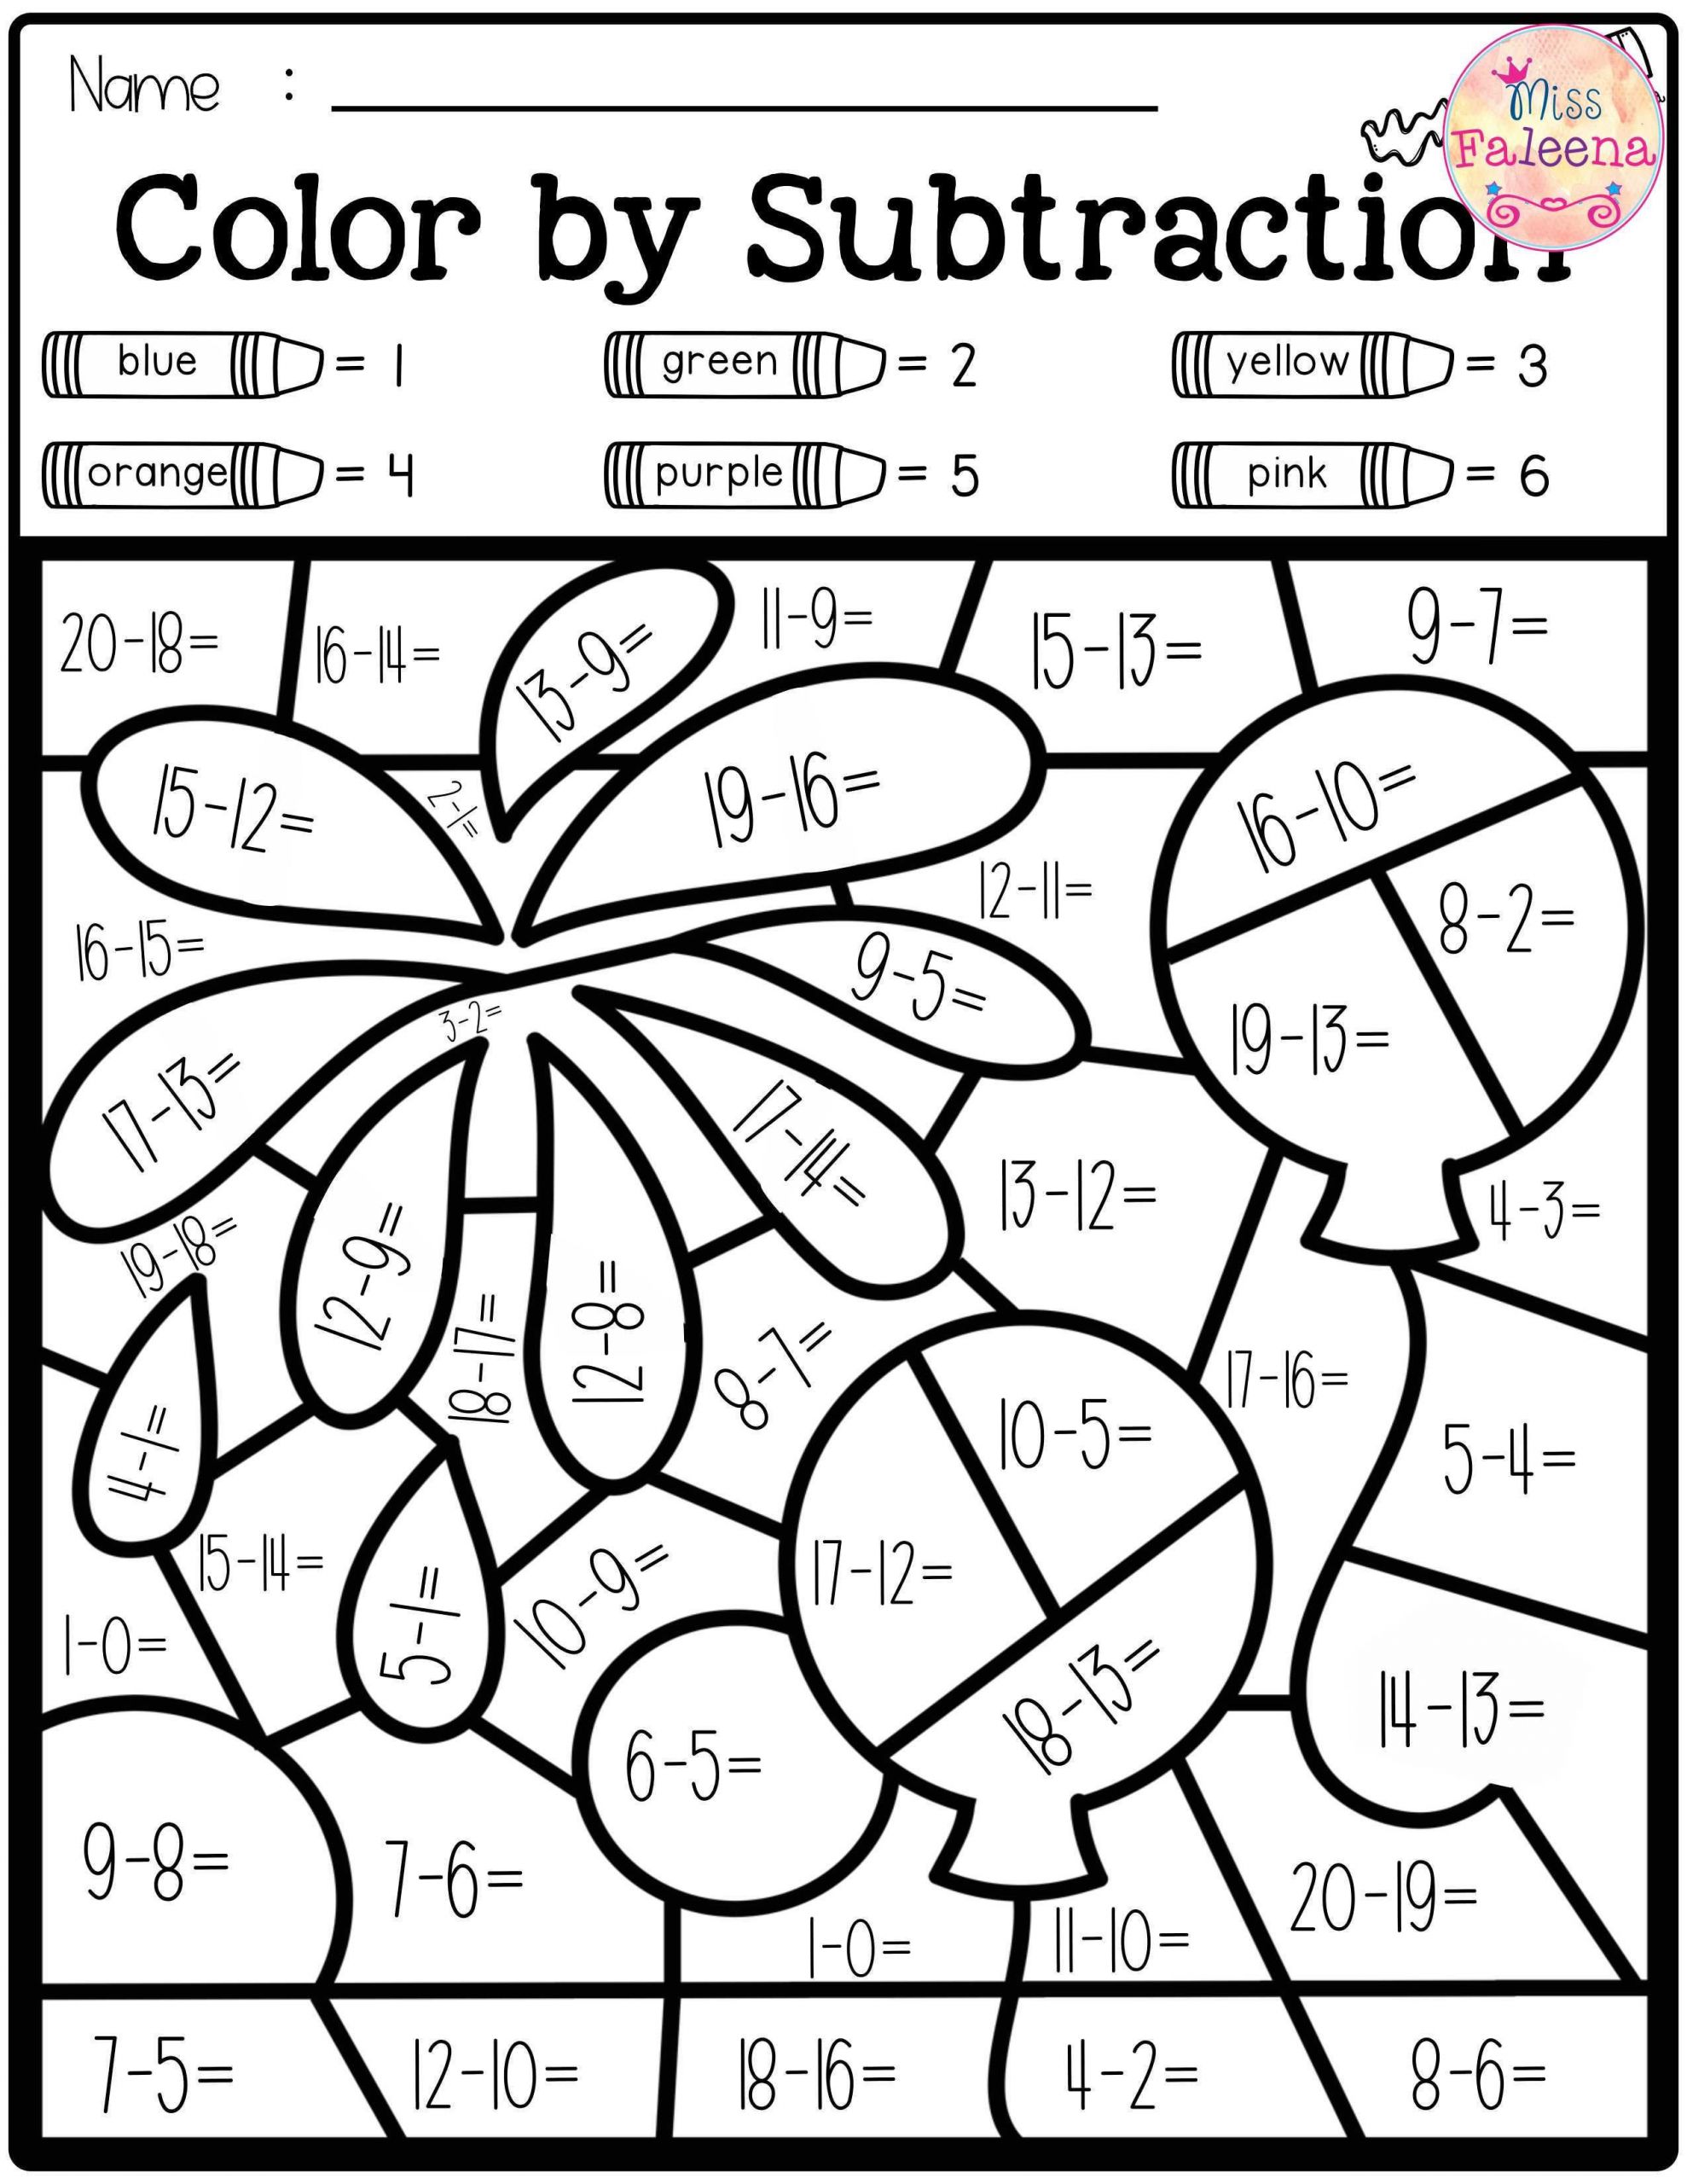 Free Math Worksheets Third Grade 3 Multiplication Multiplication Table 5 10